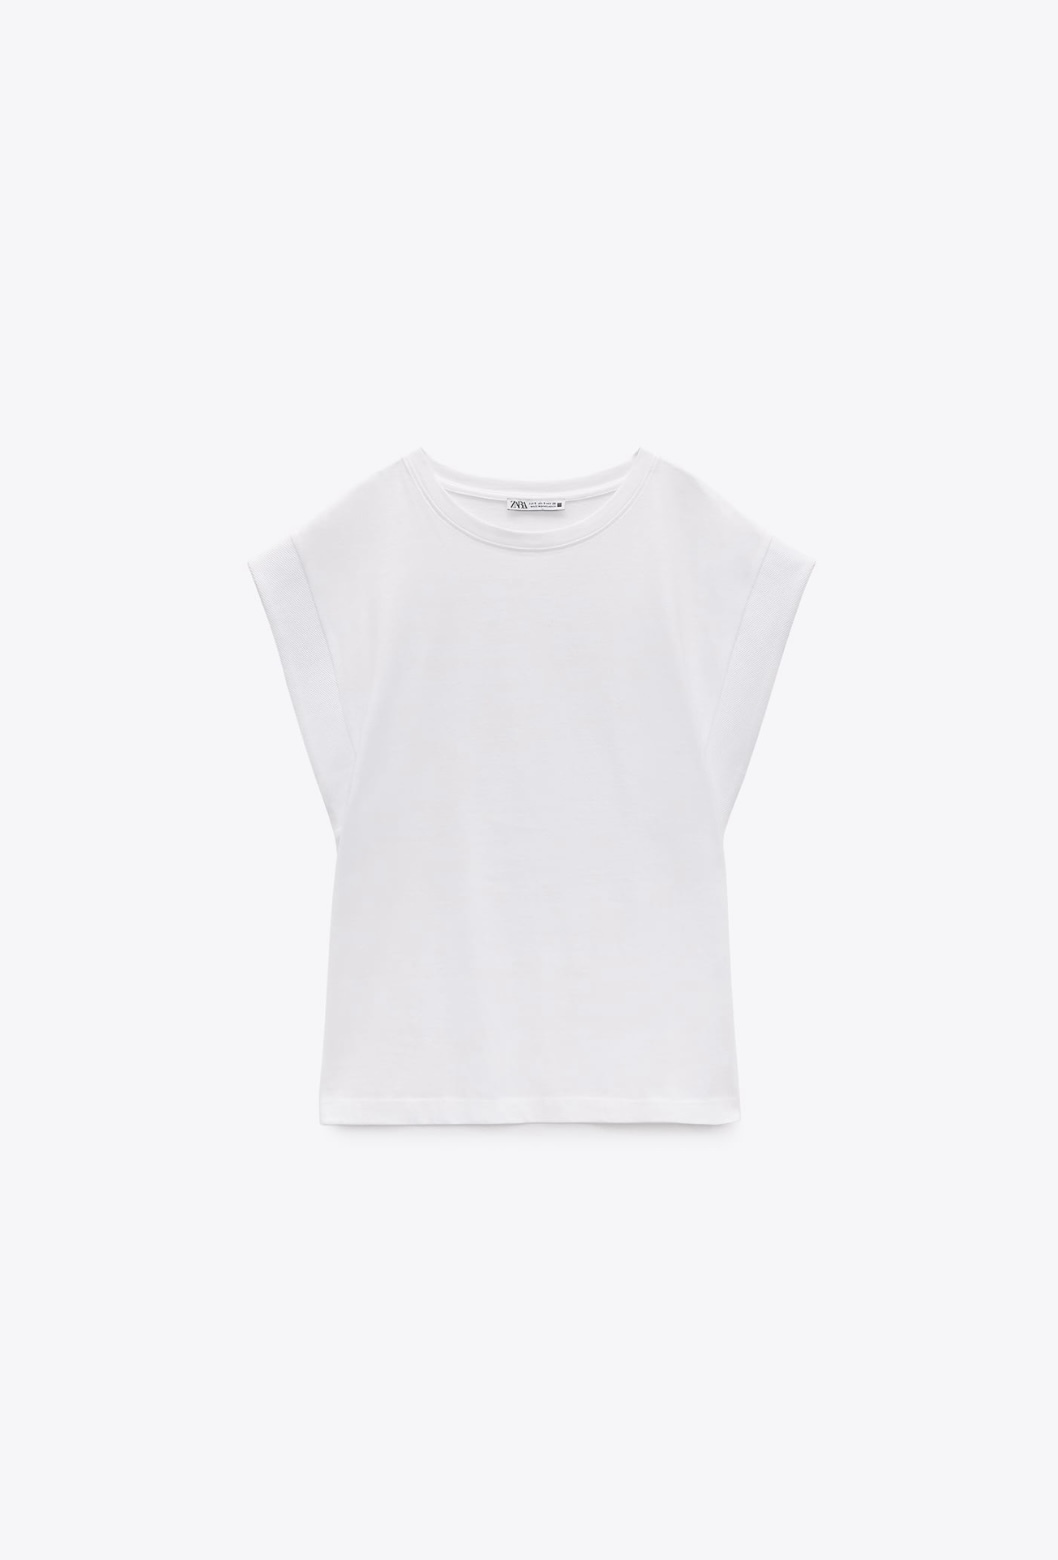 Camiseta blanca hombreras de Zara